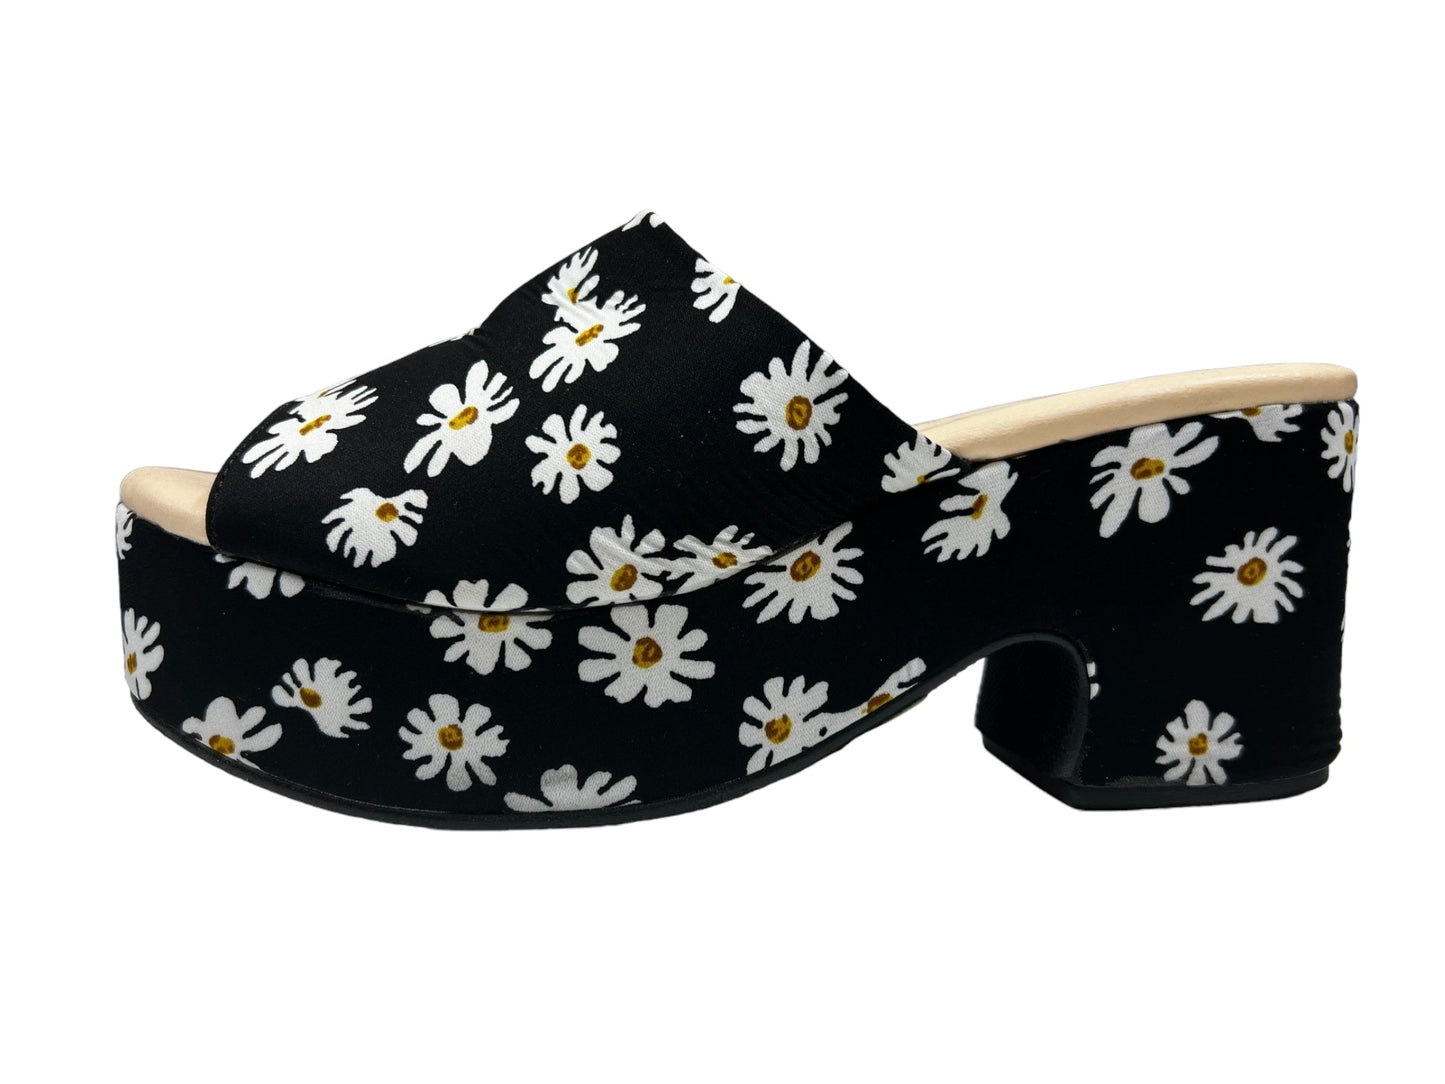 Black Floral Shoes Heels Wedge Matisse, Size 9